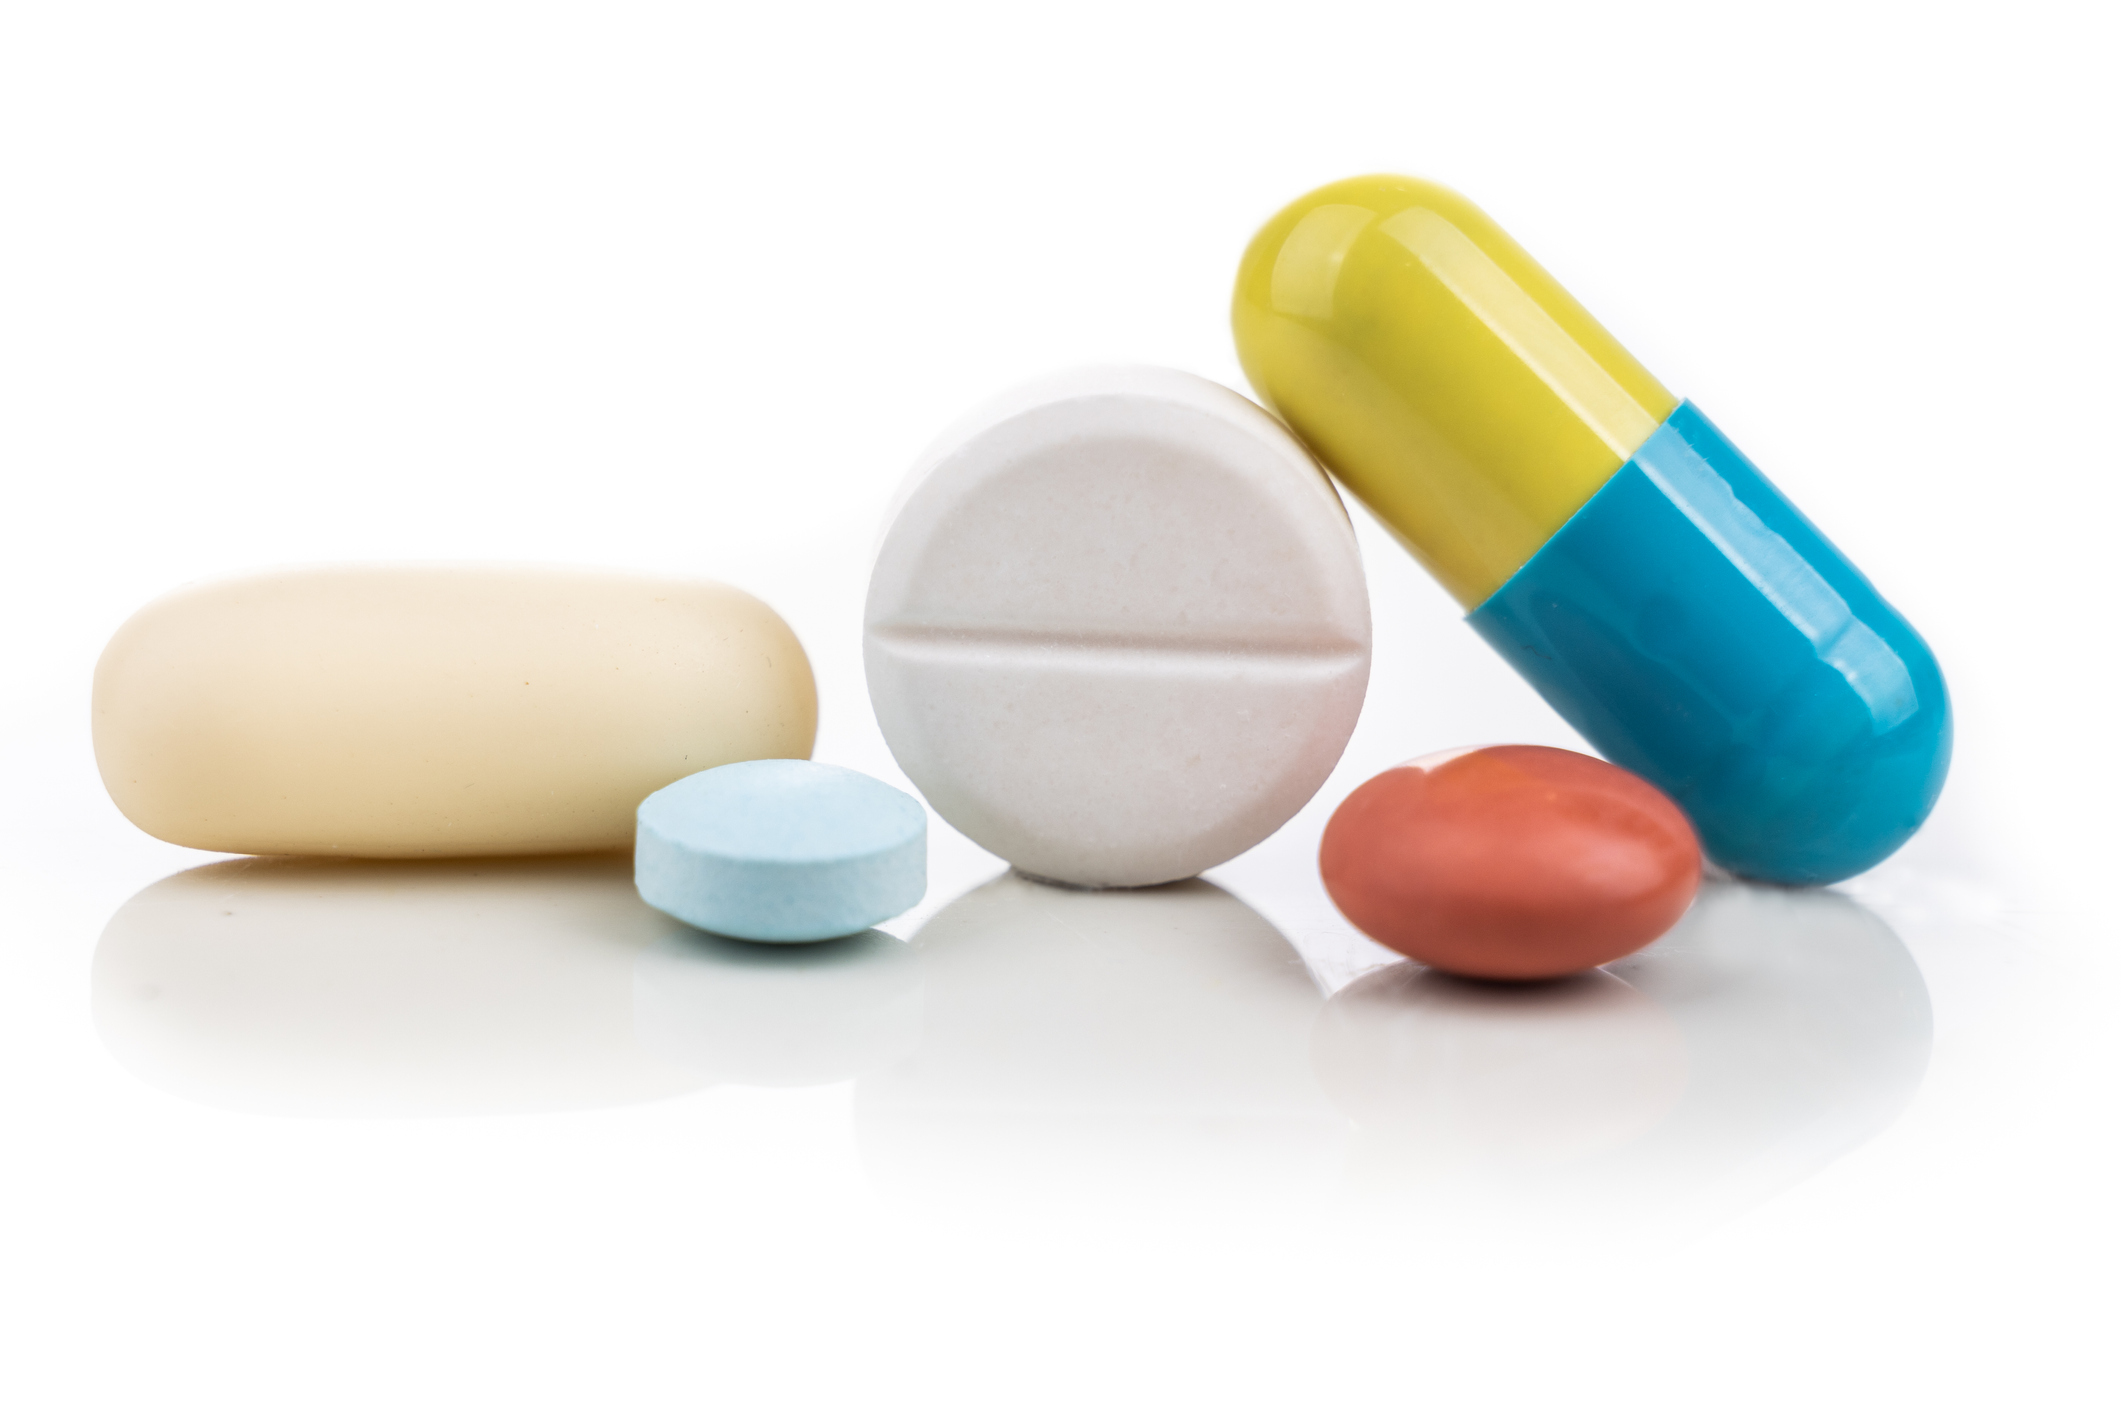 Capsule Looks To Build An On-Demand Pharmacy 